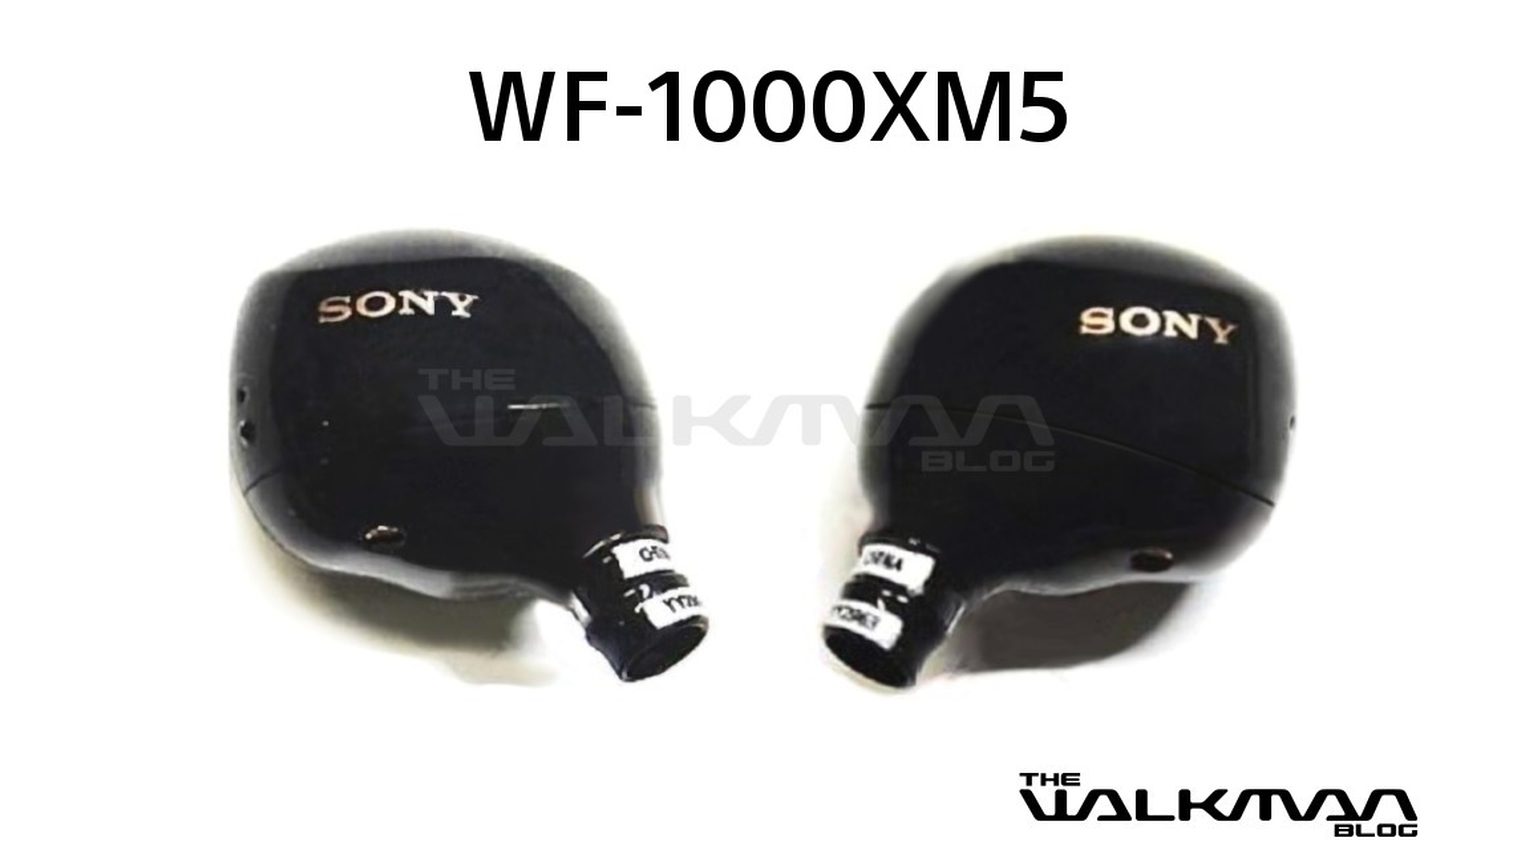 Der Sony WF-1000XM5 Leak bei The Walkman Blog